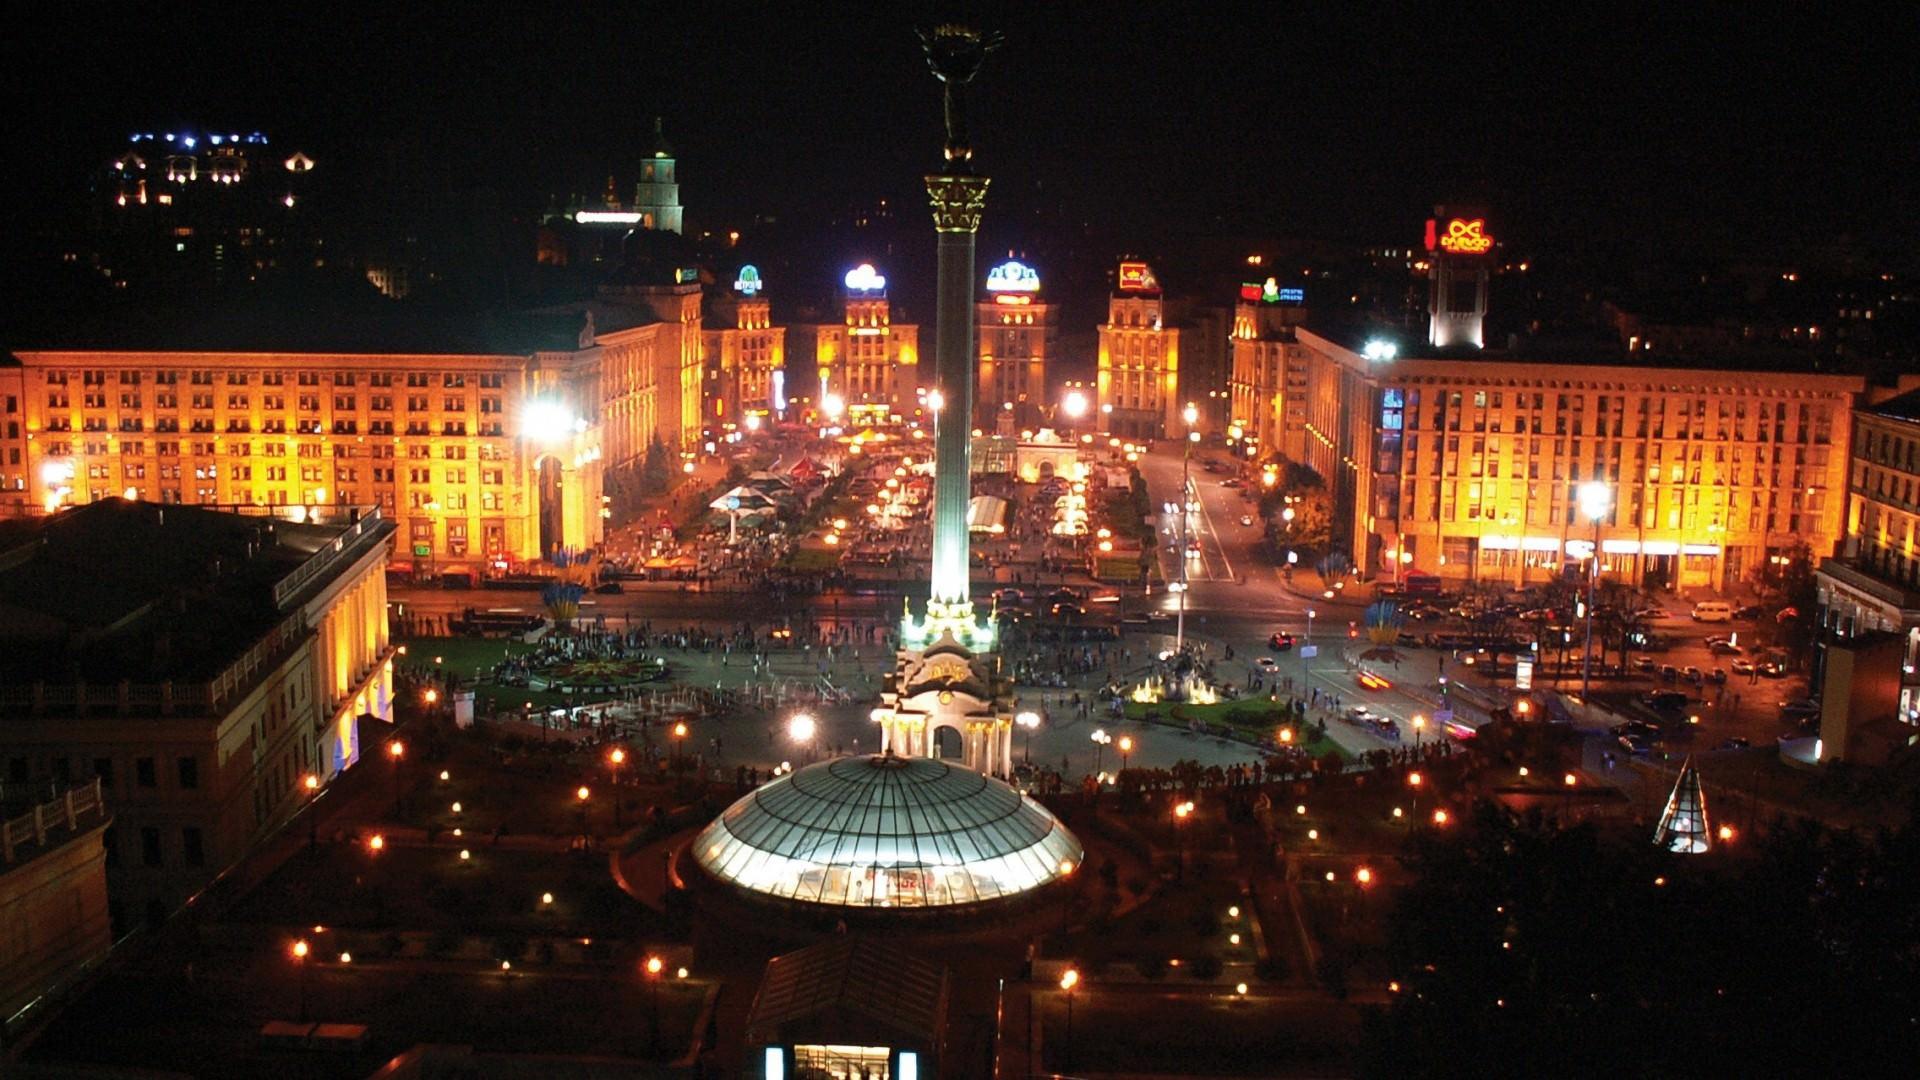 The central square in Kiev, Ukraine wallpaper and image